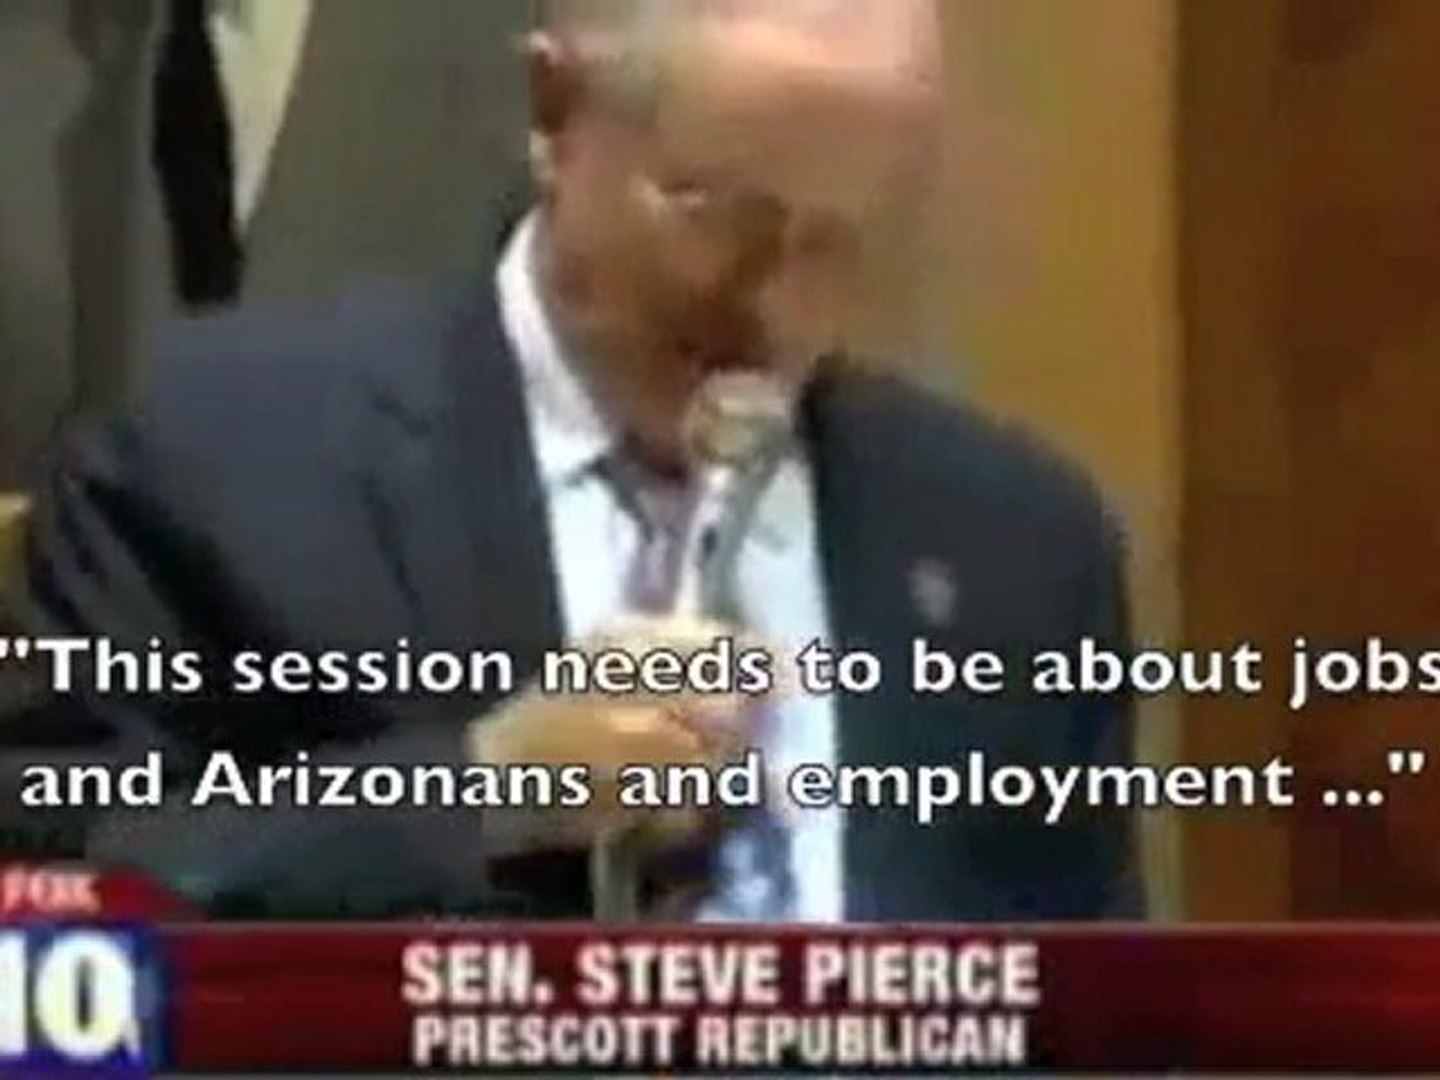 Latest News Regarding Arizona Unemployment in 2012